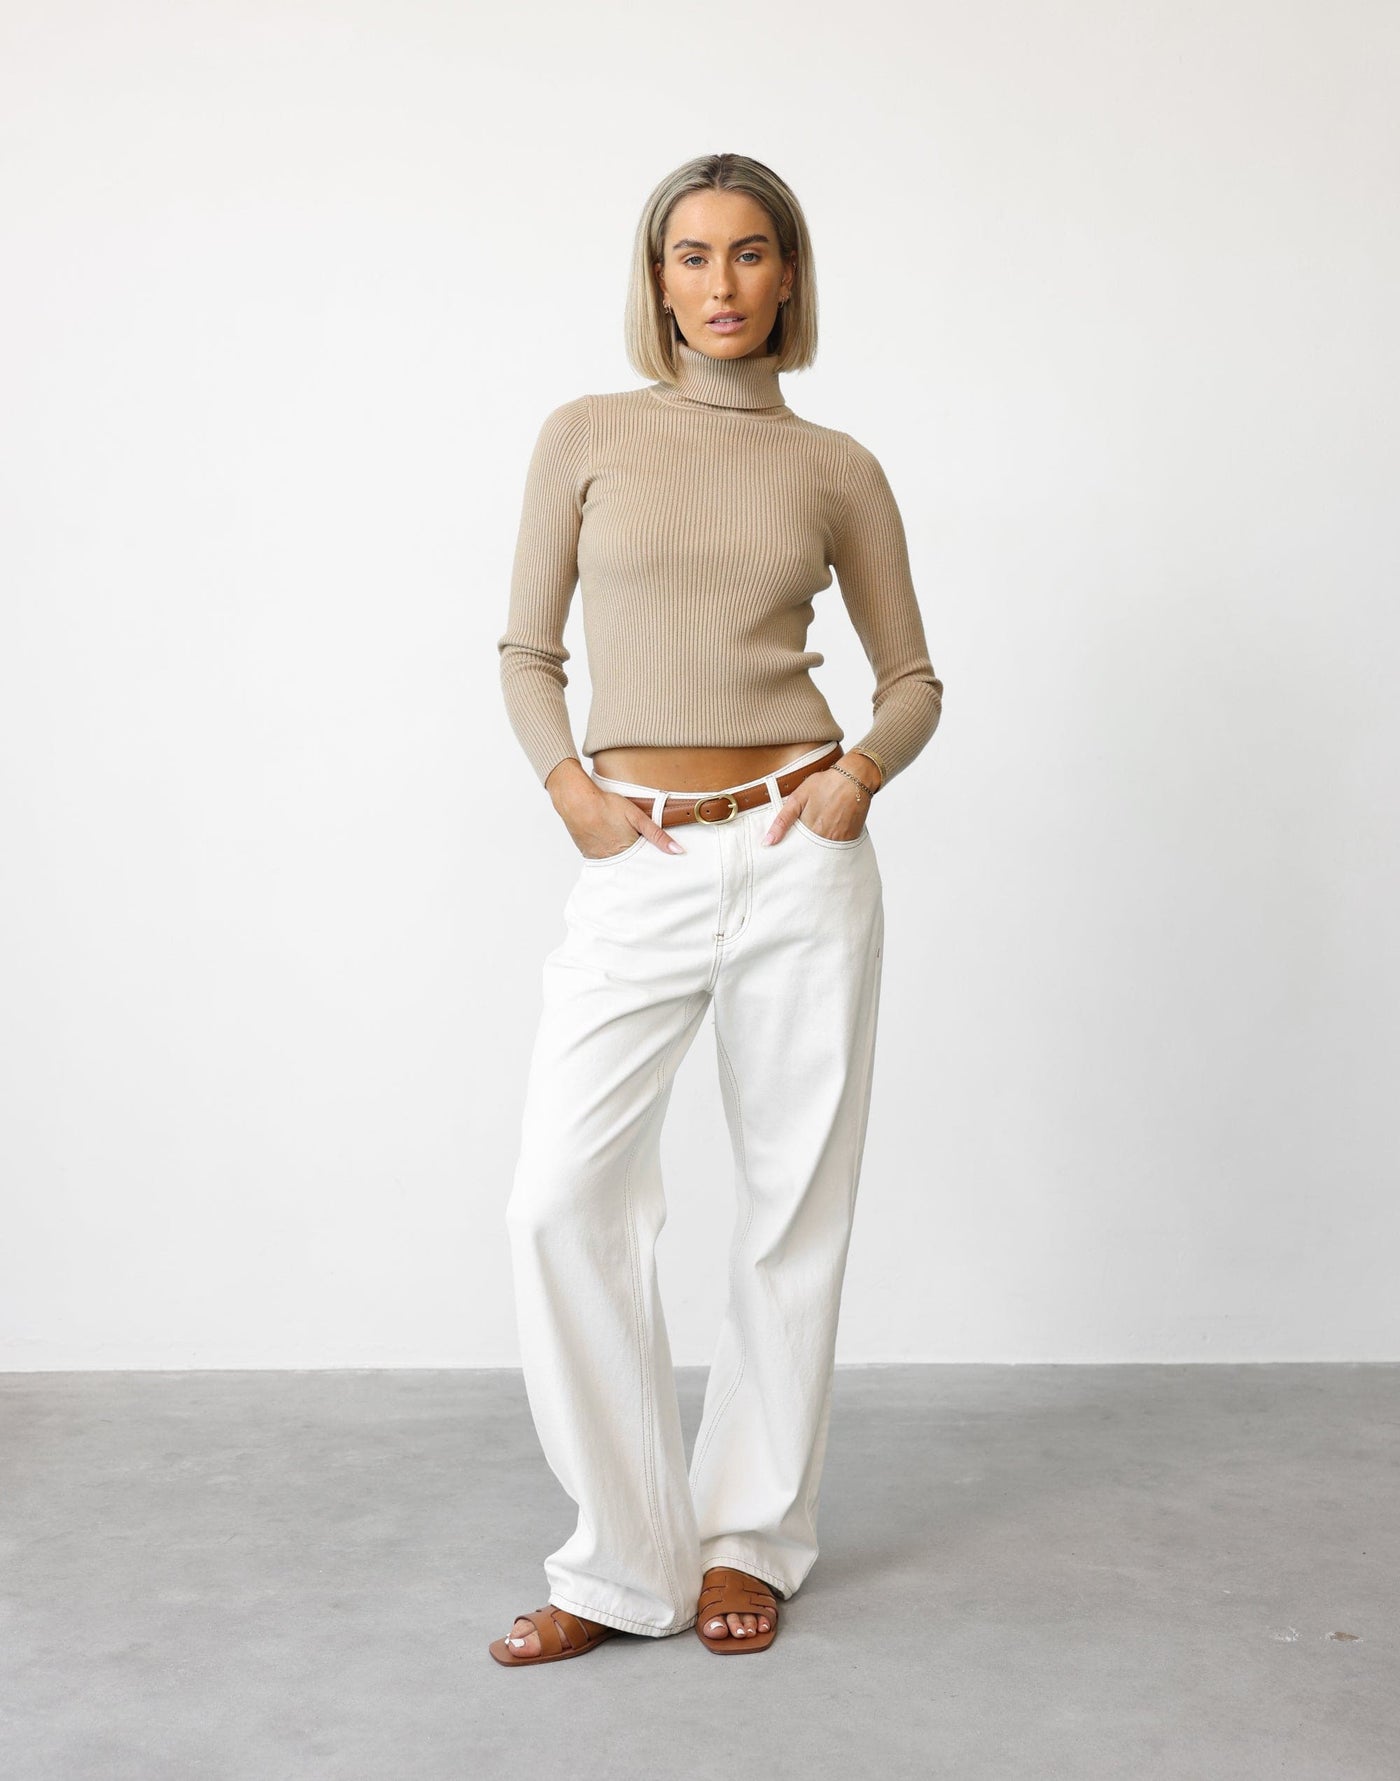 Davison Long Sleeve Top (Camel) - Turtleneck Long Sleeve Knit Top - Women's Top - Charcoal Clothing